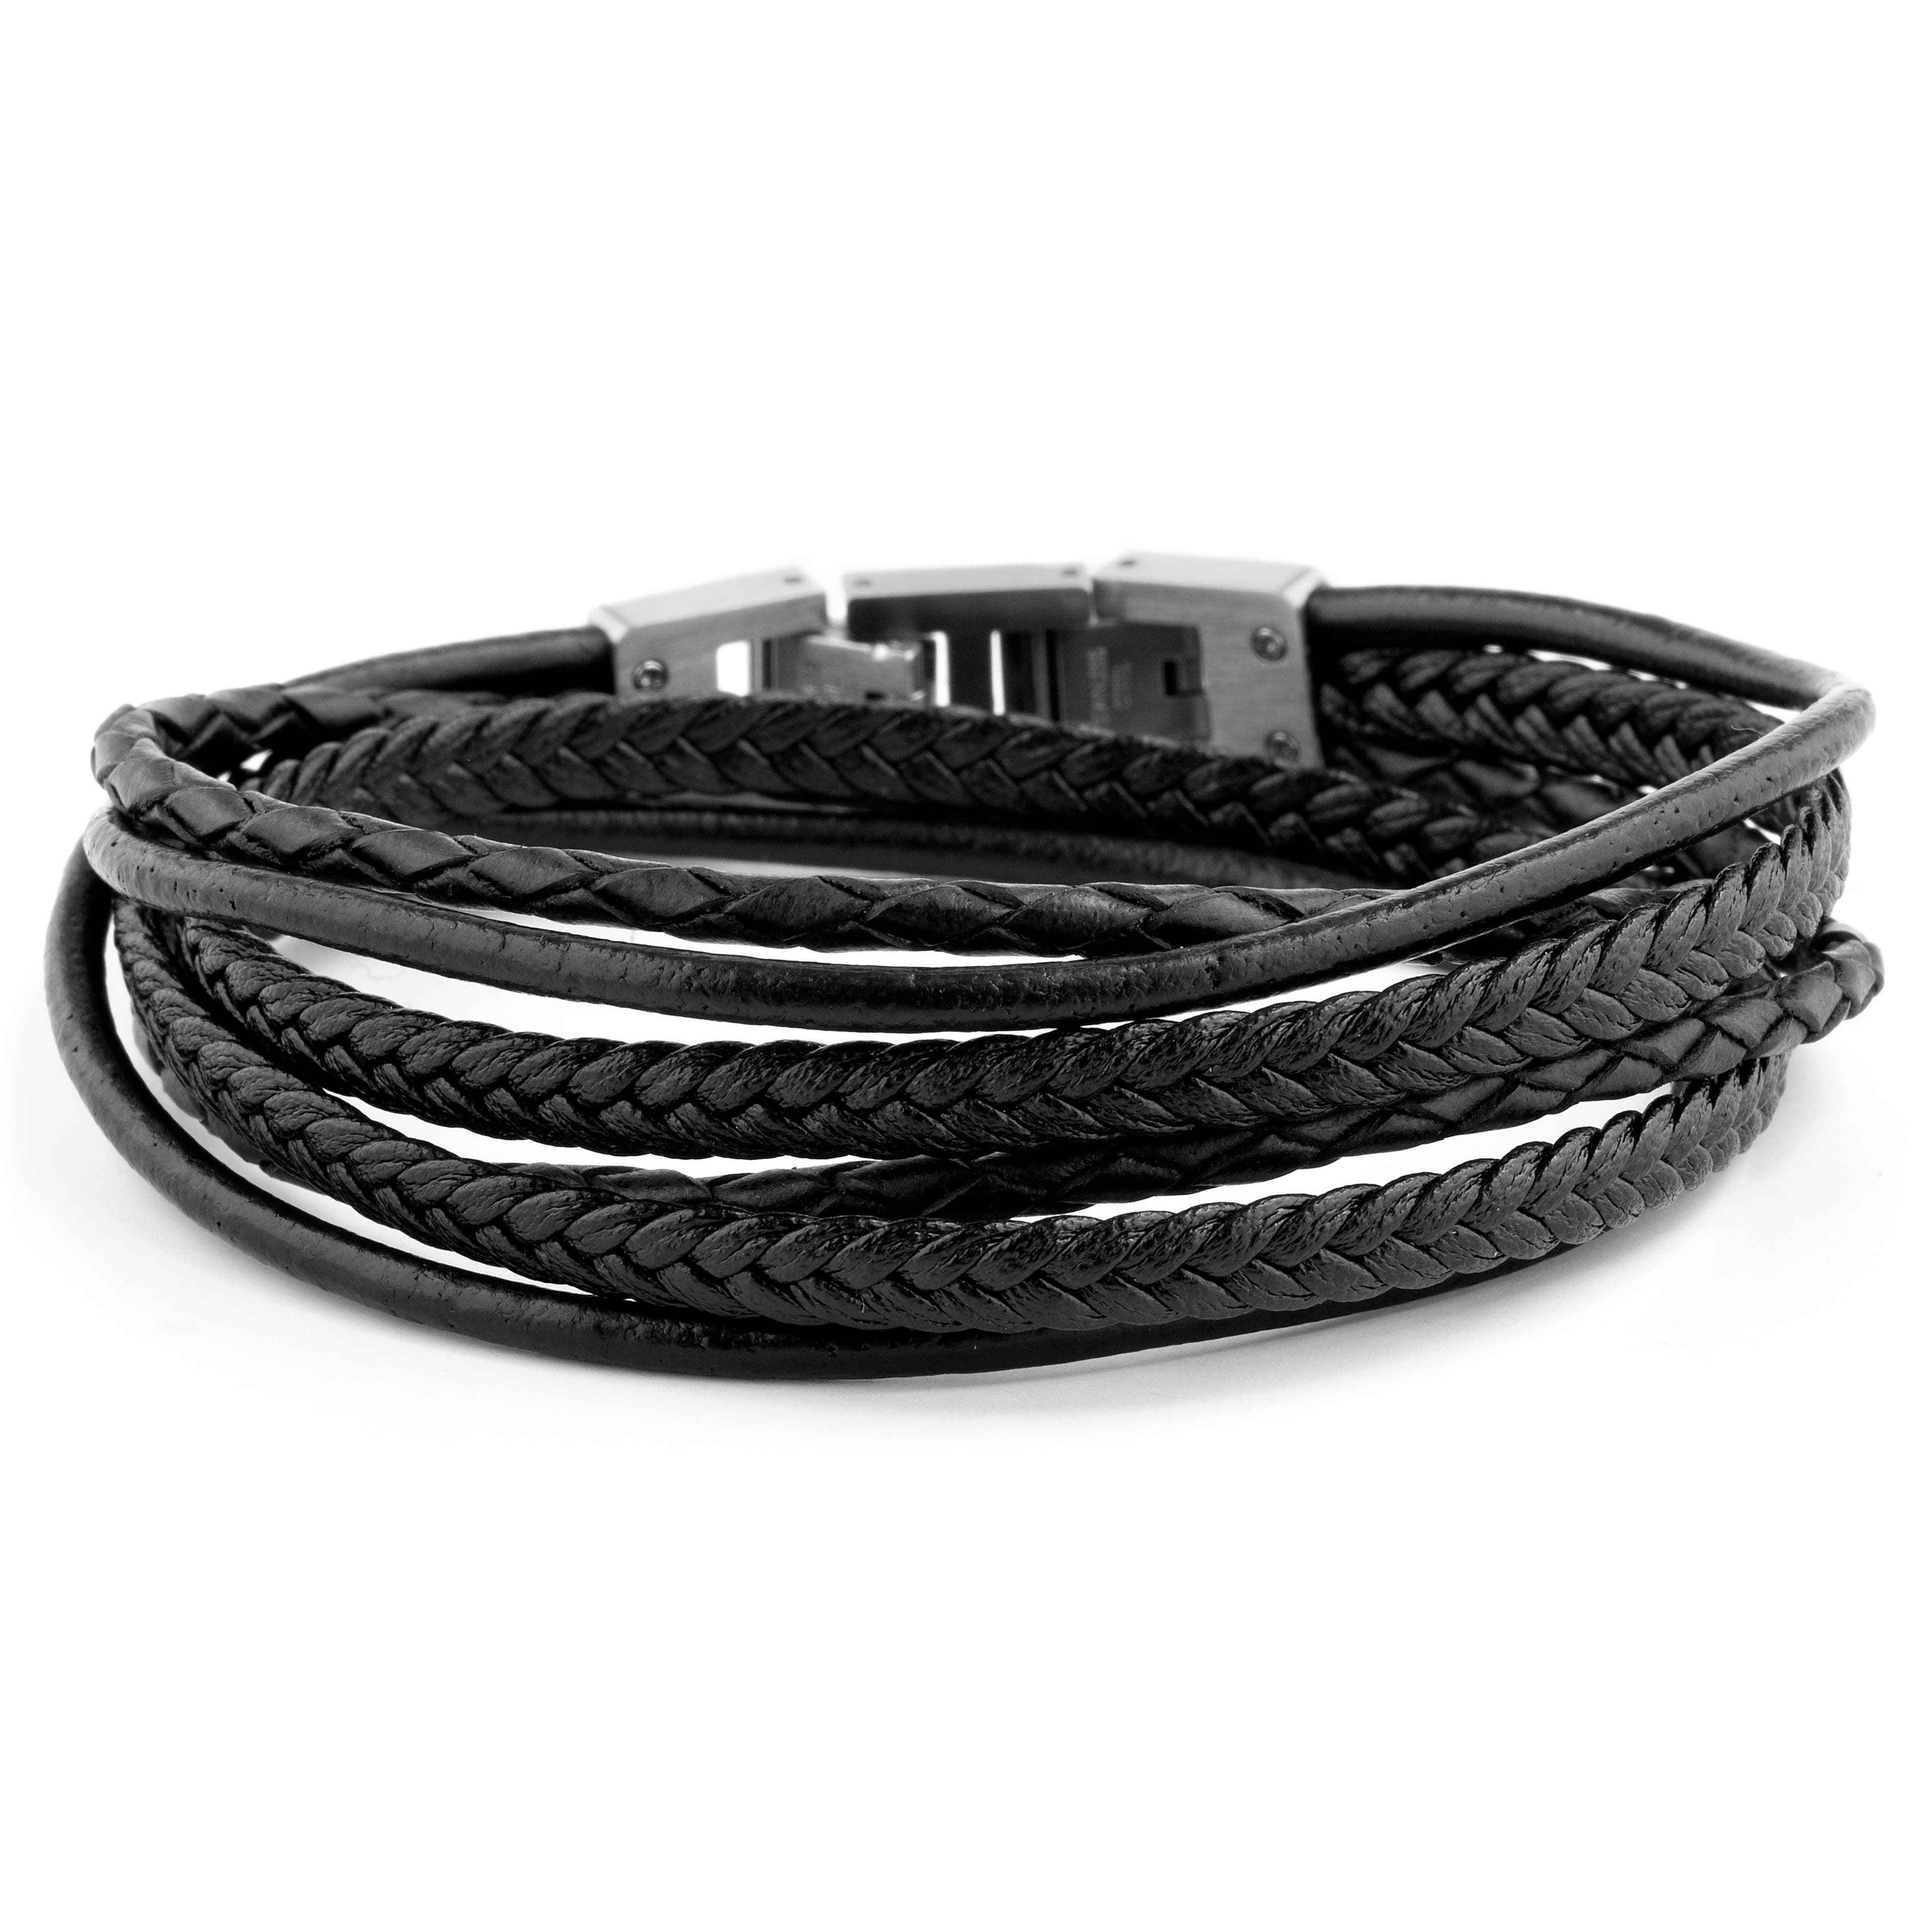 Lucleon Men's Engravable Braided Leather Cord Bracelet